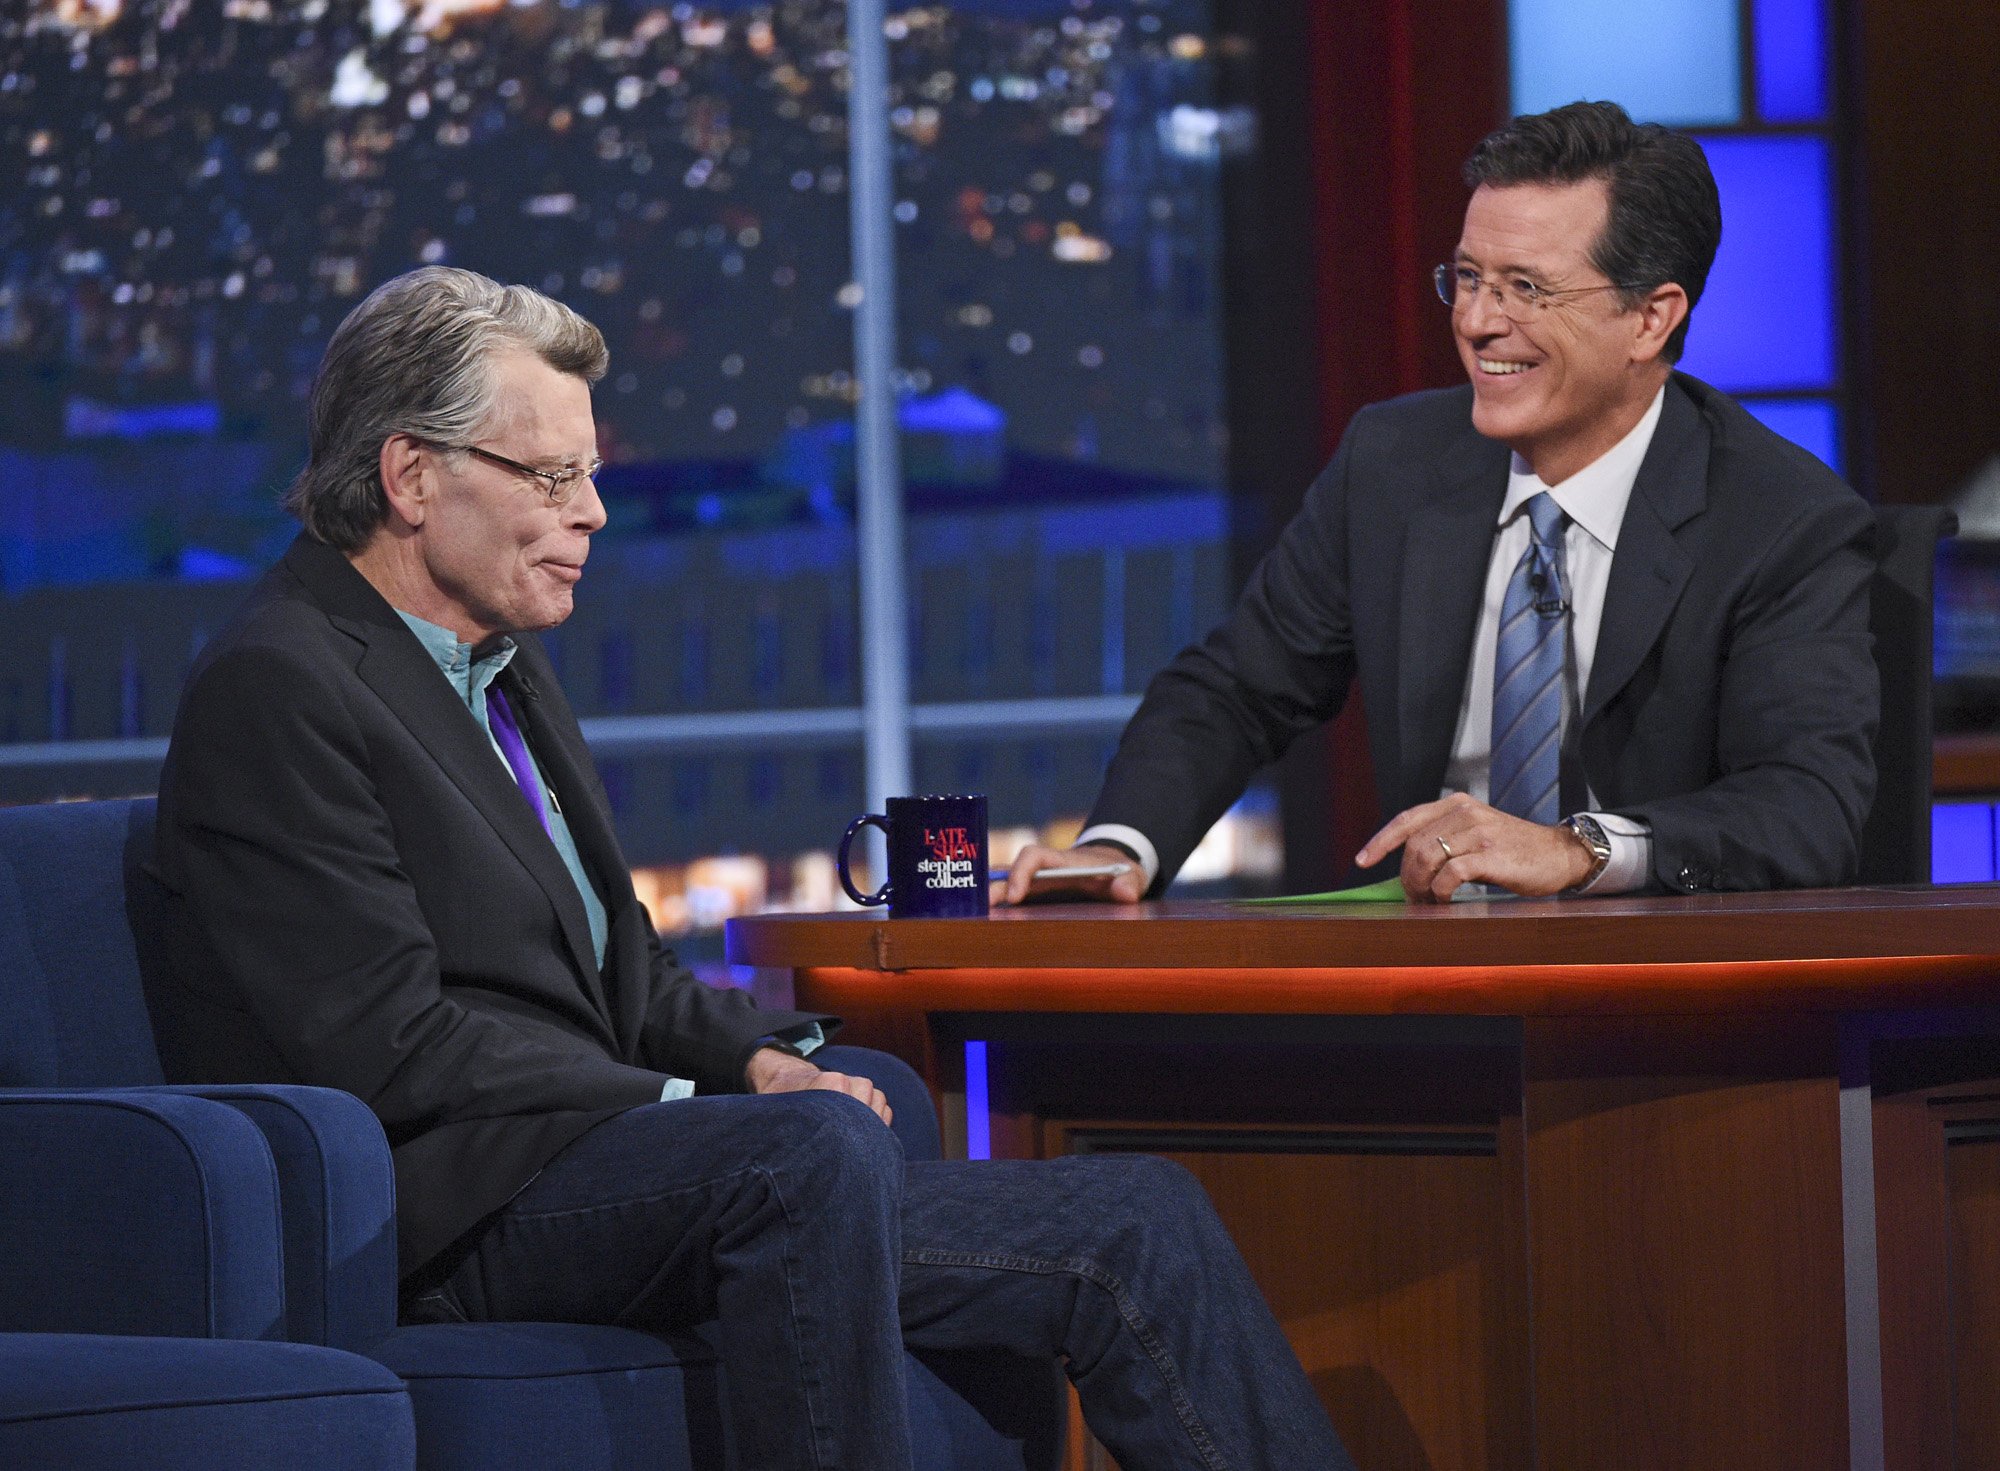 Stephen King and Stephen Colbert